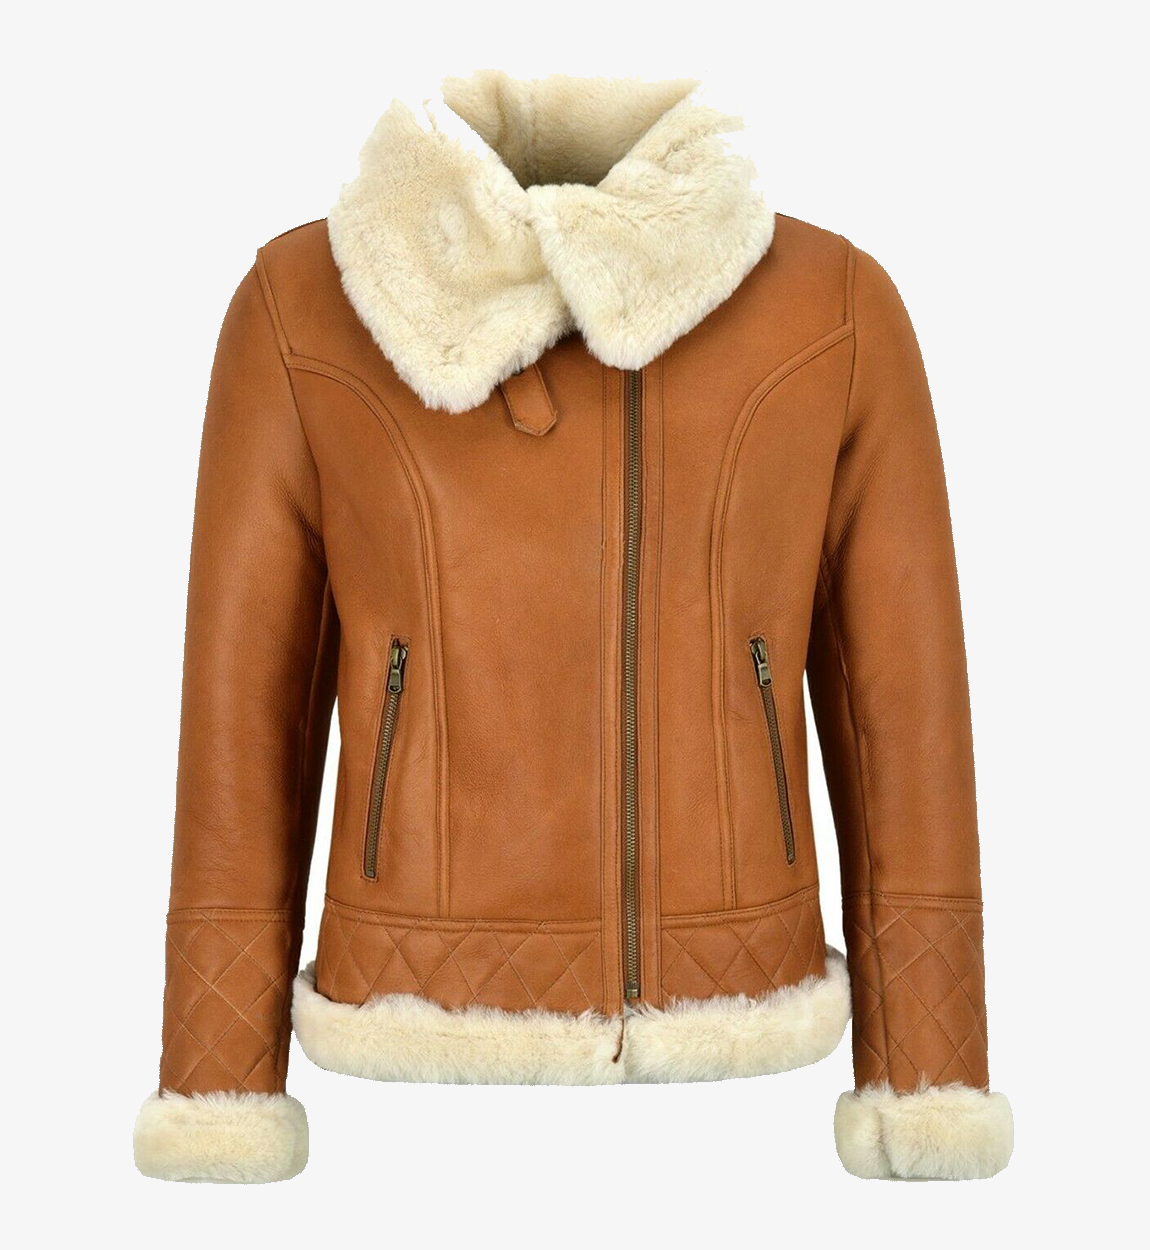 Women's Tan Brown Real Sheepskin Bomber Leather Jacket